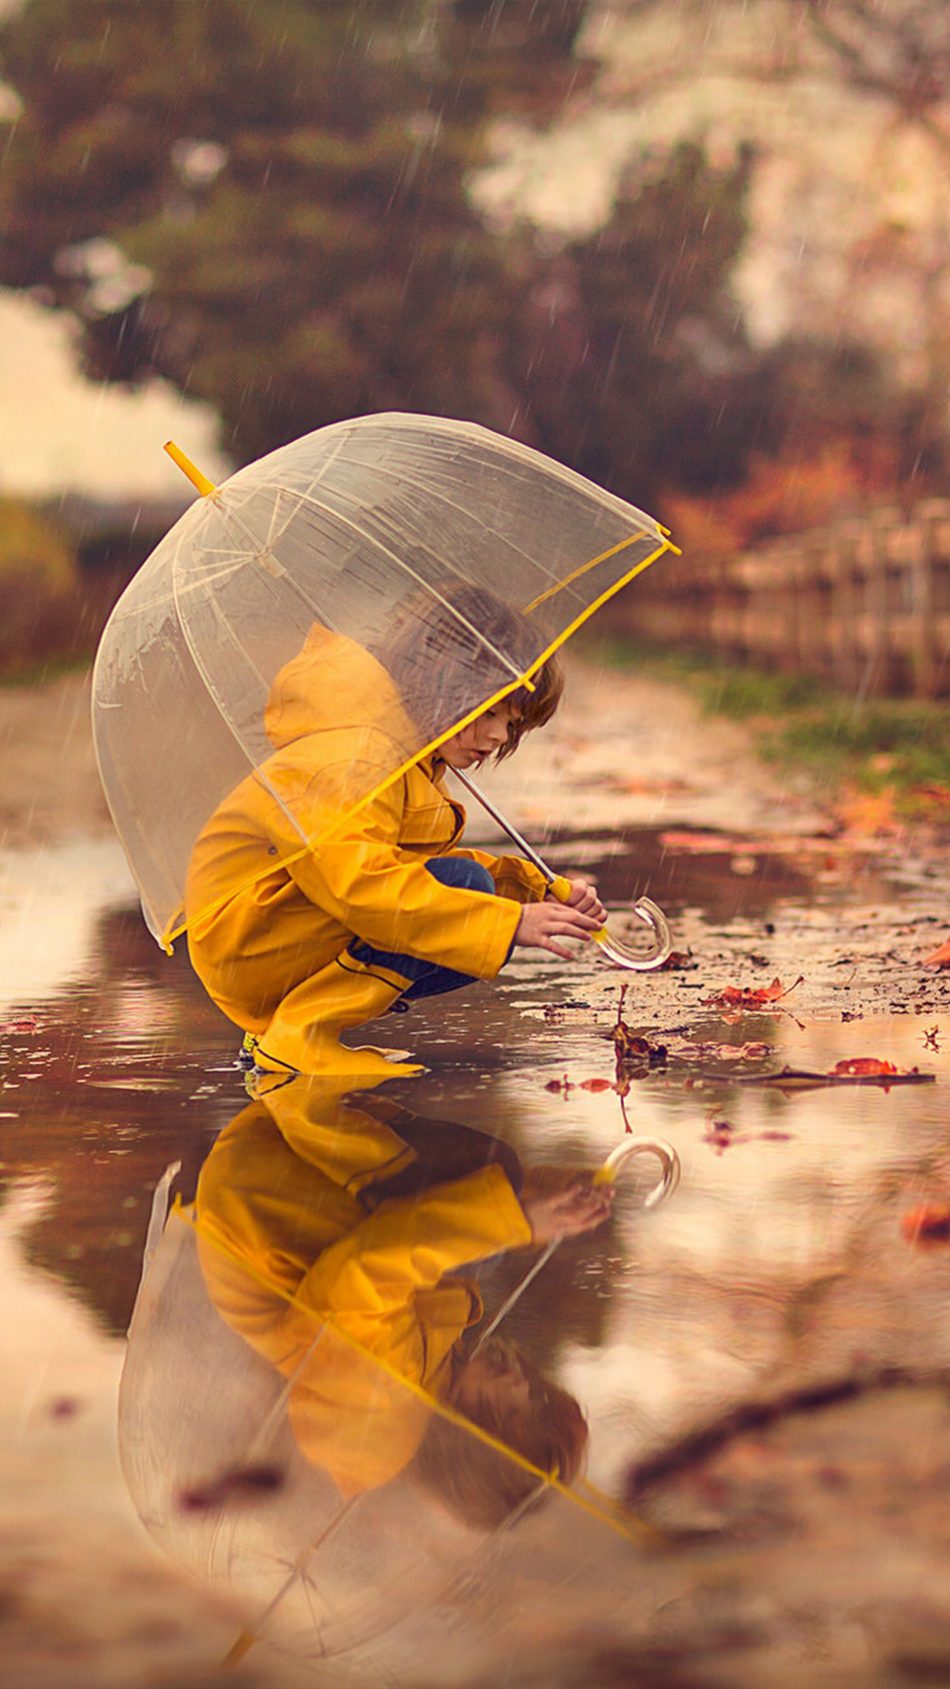 Kid Umbrella Rain Reflection 4K Ultra HD Mobile Wallpaper